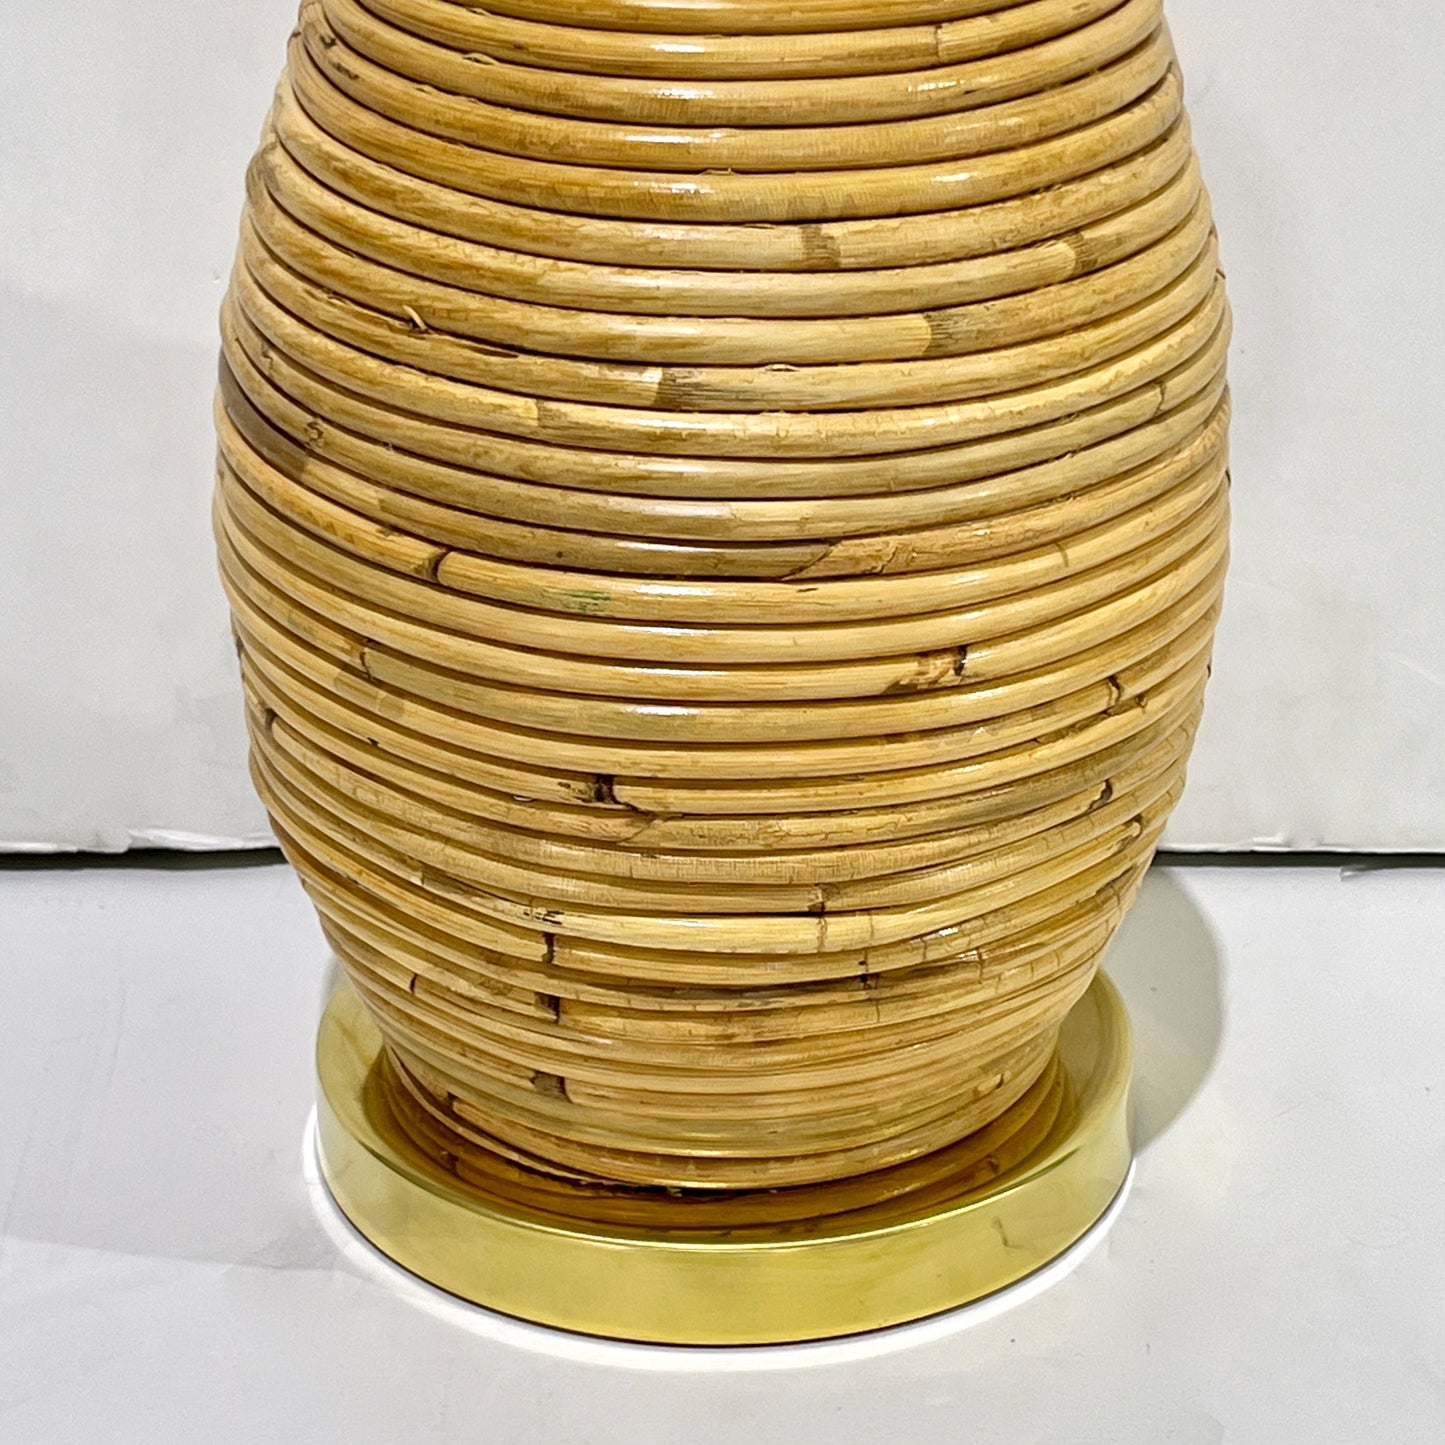 Italian Organic Modern Contemporary Brass & Rattan Mushroom Table/Floor Lamps